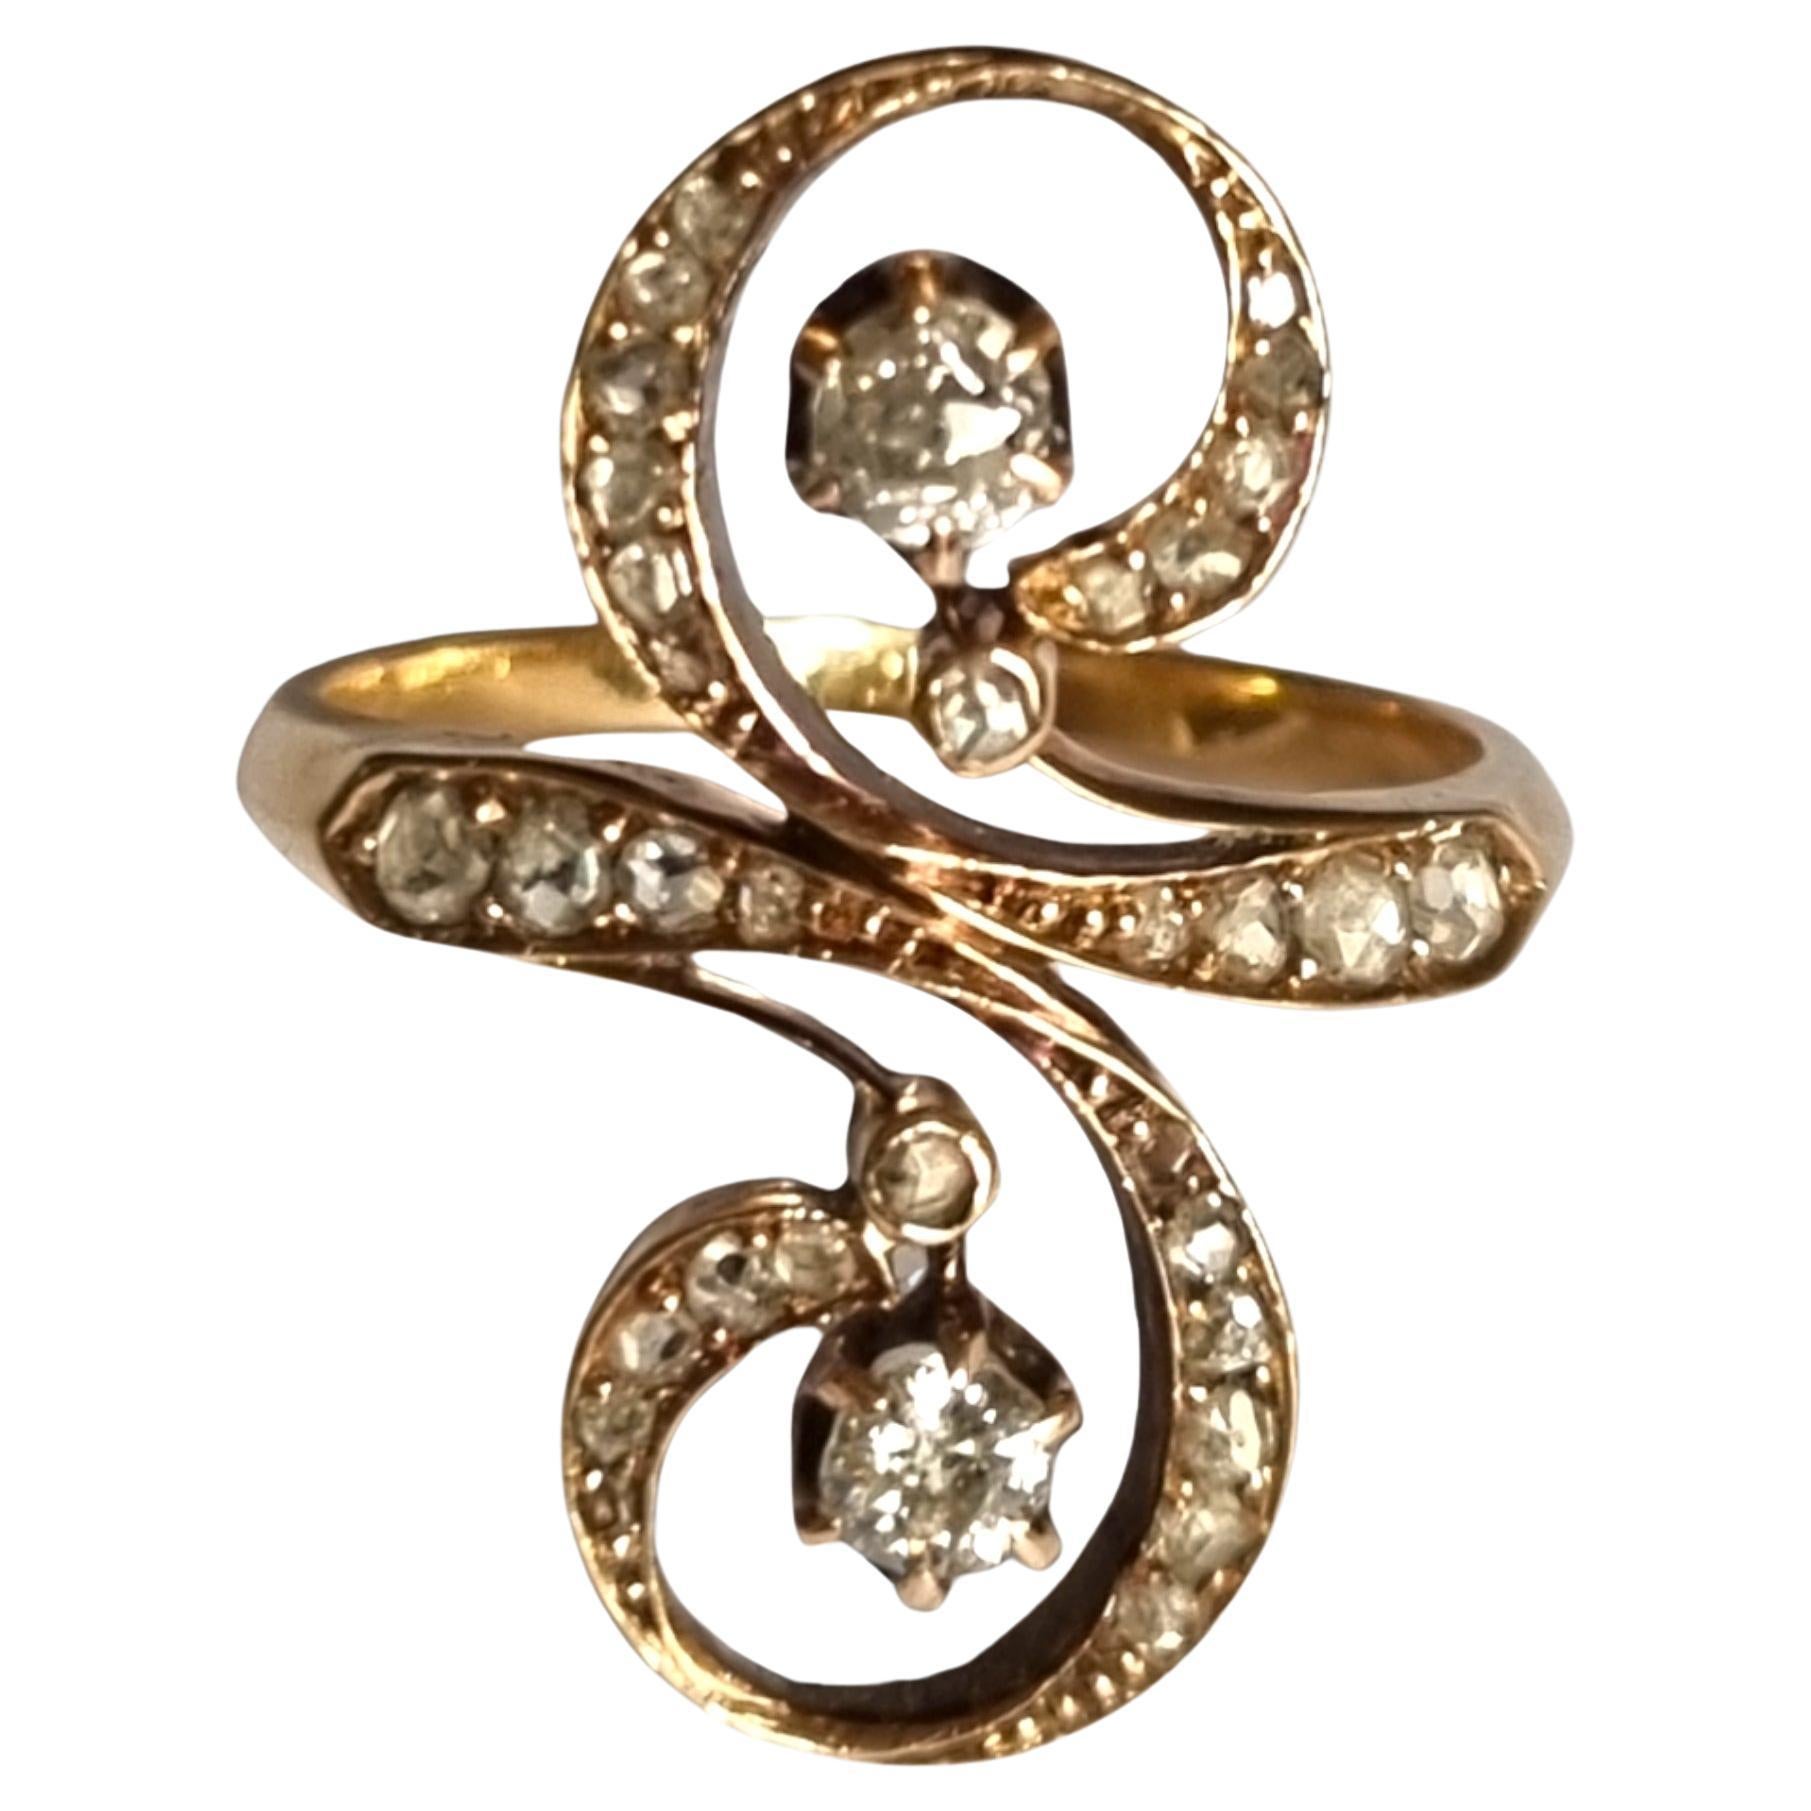 Art Nouveau / Belle Epoque 1900 Diamond Ring in 18Karat Gold